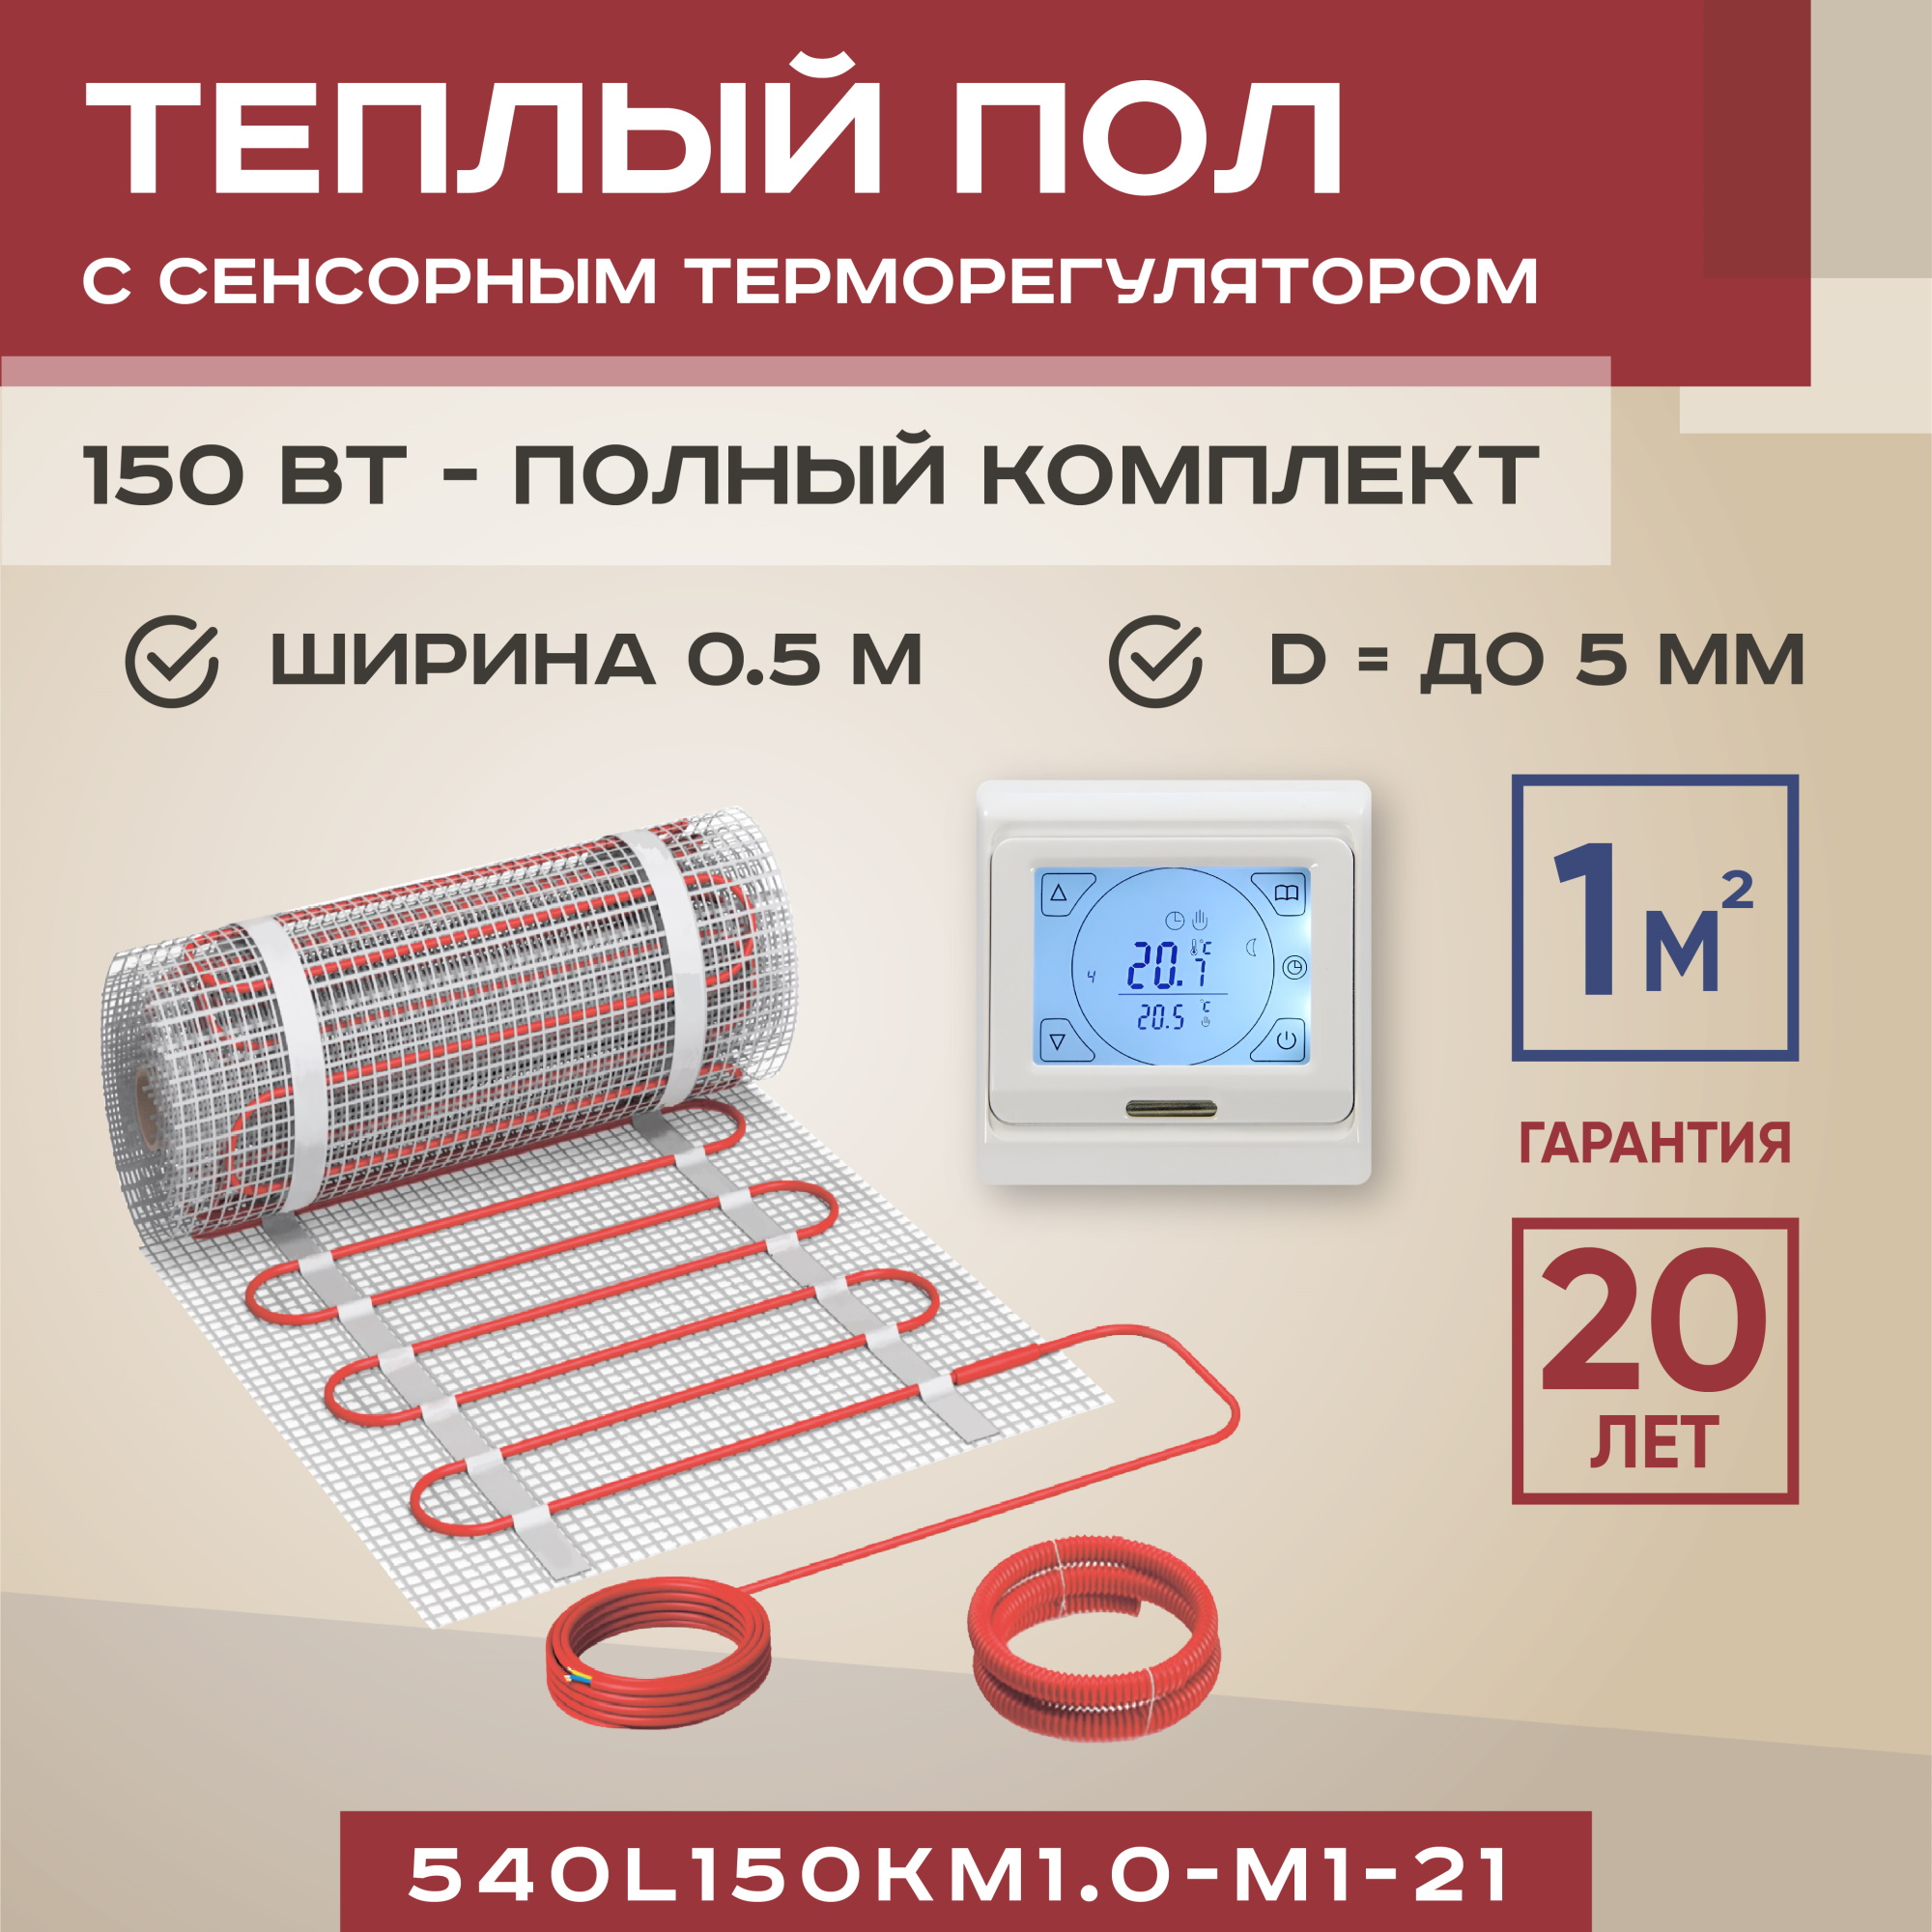 Теплый пол Vimarr L 540L150KM1.0-M1-21 1 м2 150 Вт с белым терморегулятором